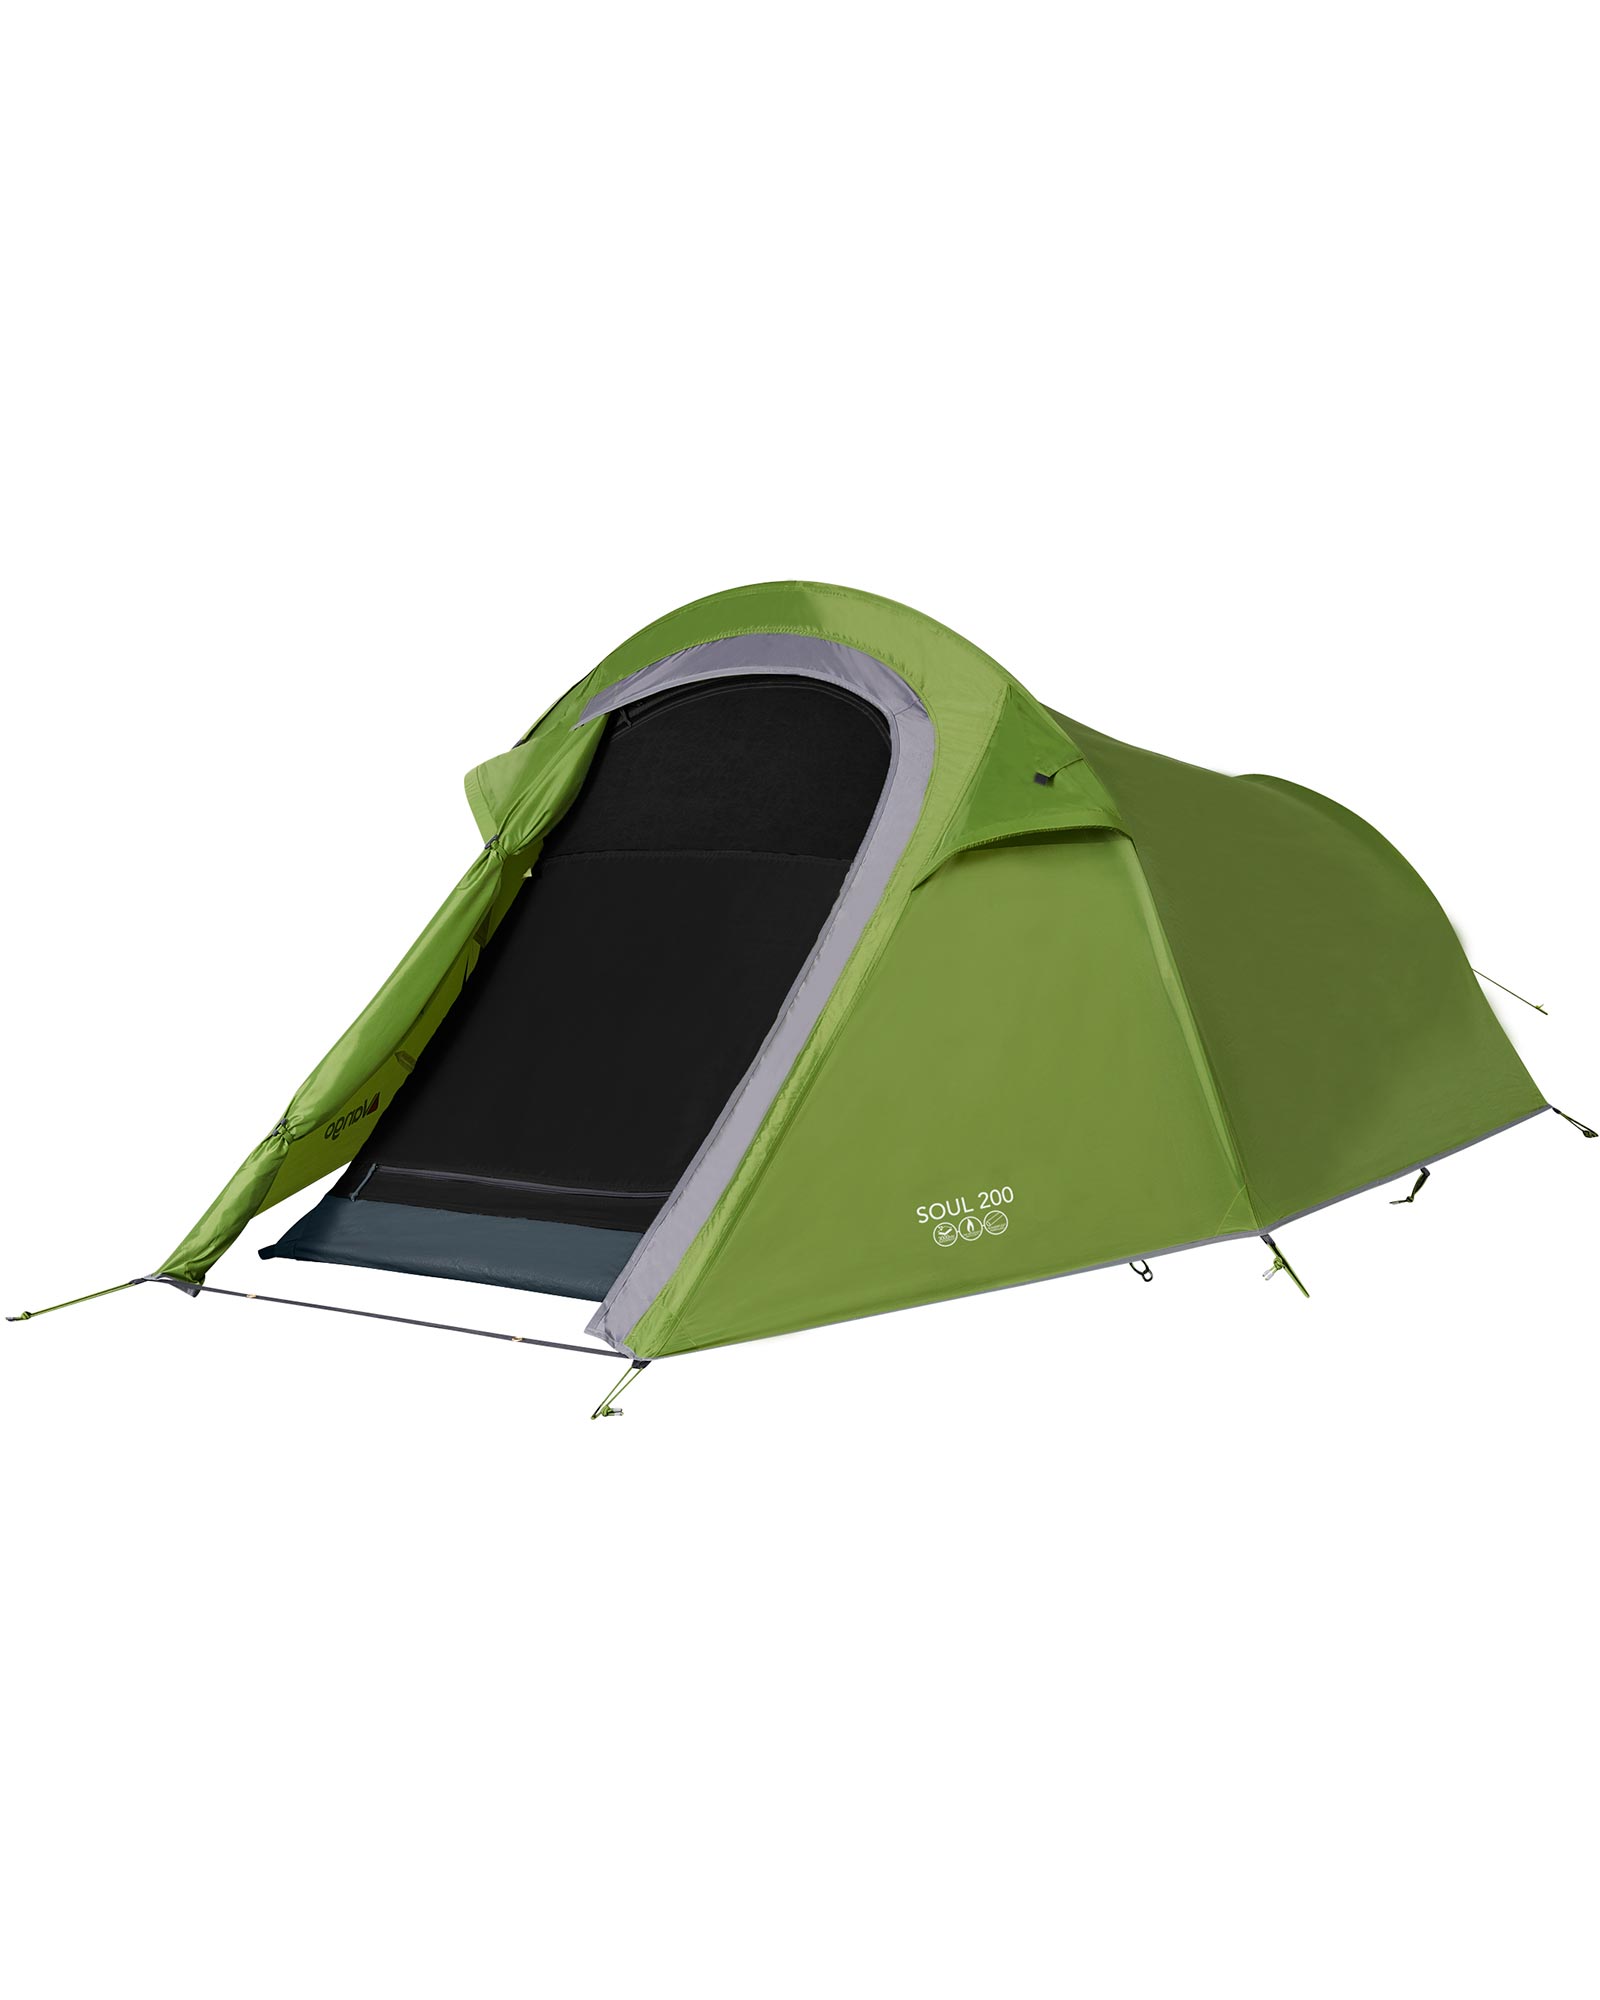 Product image of Vango Soul 200 Tent